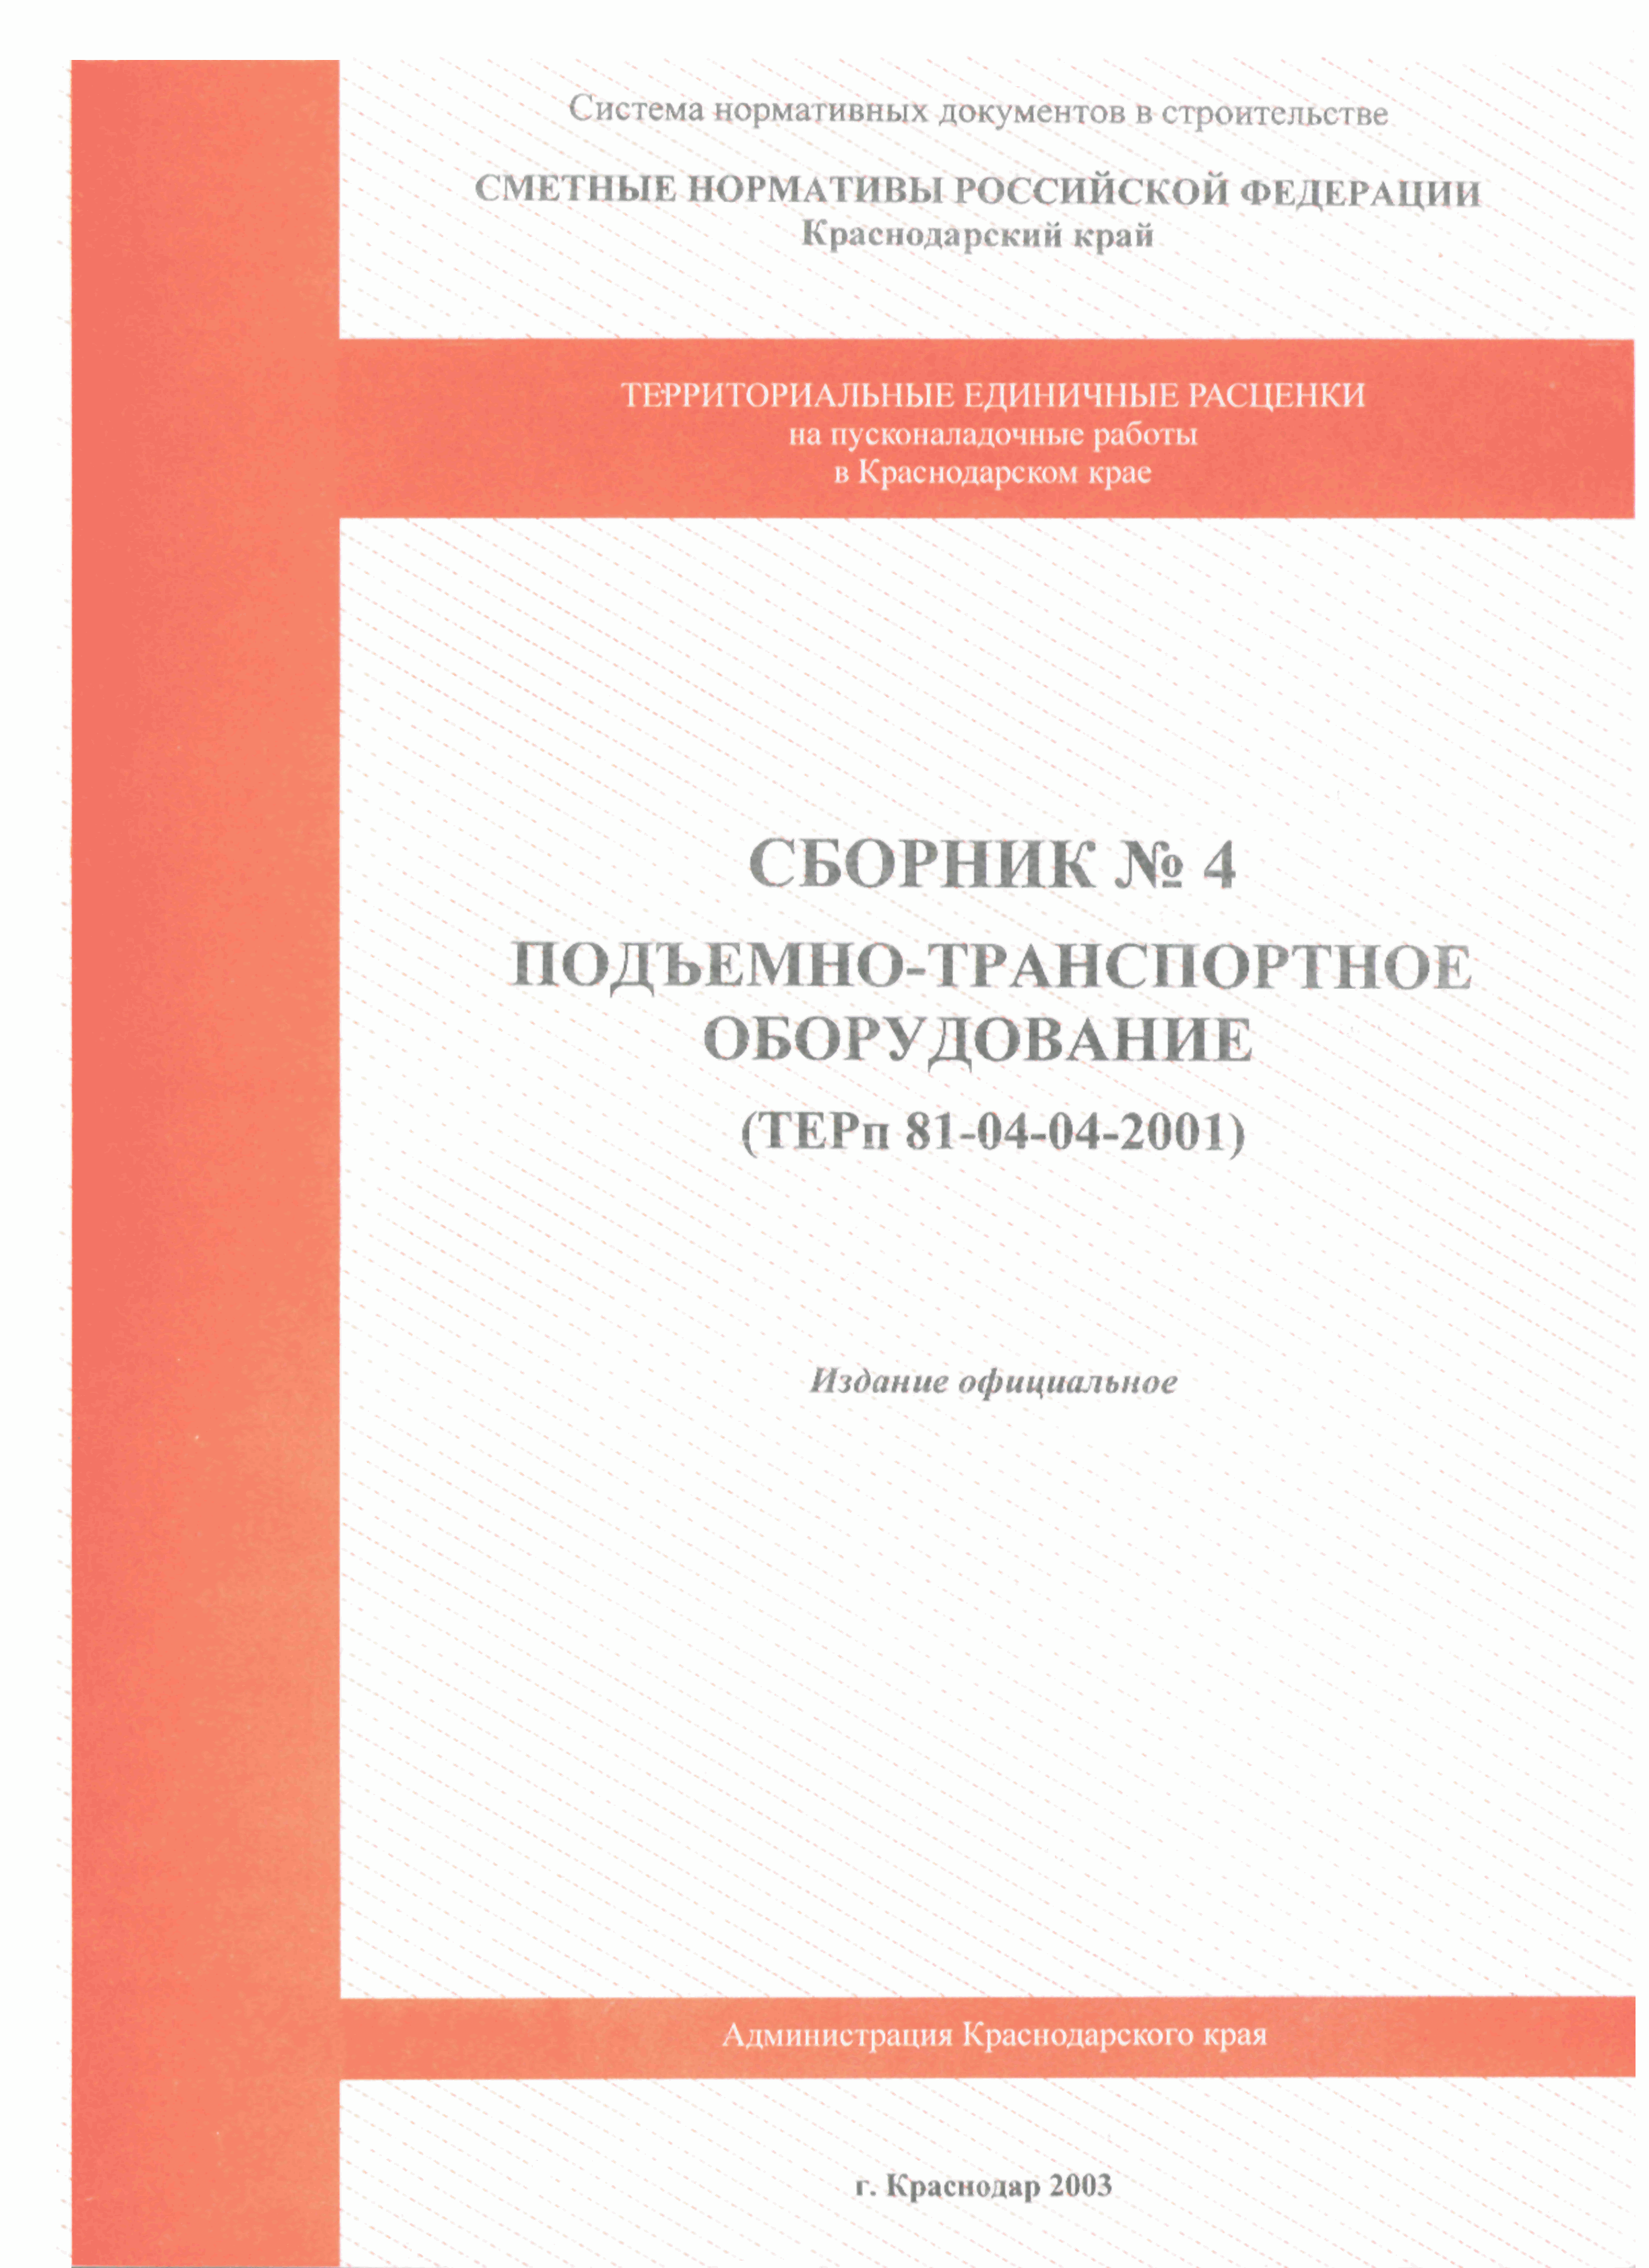 ТЕРп Краснодарского края 2001-04